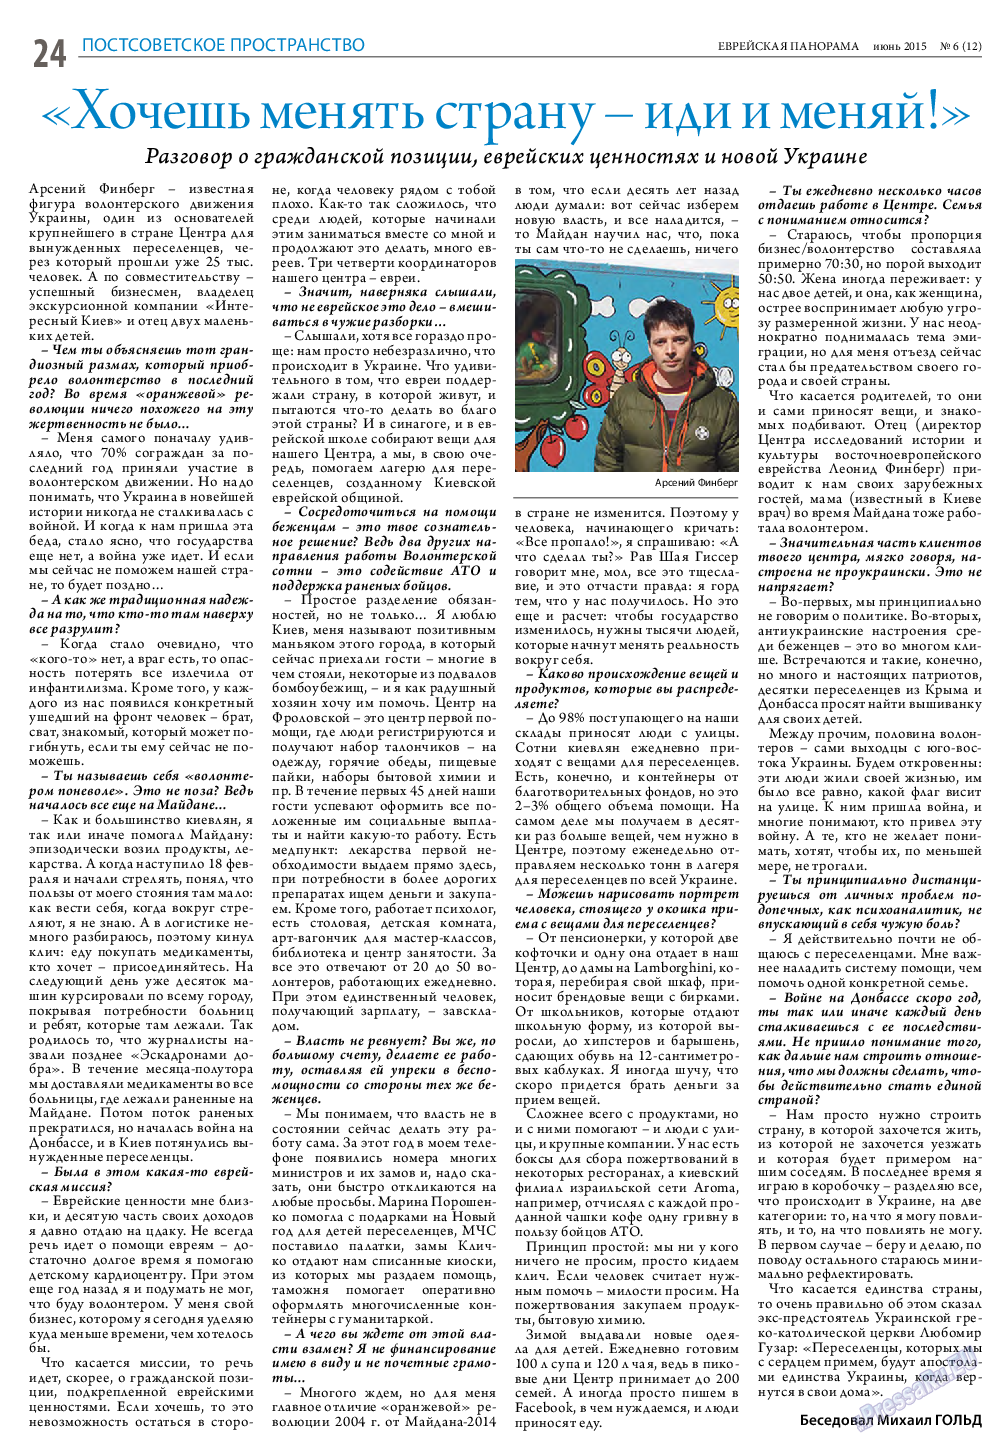 Еврейская панорама, газета. 2015 №6 стр.24